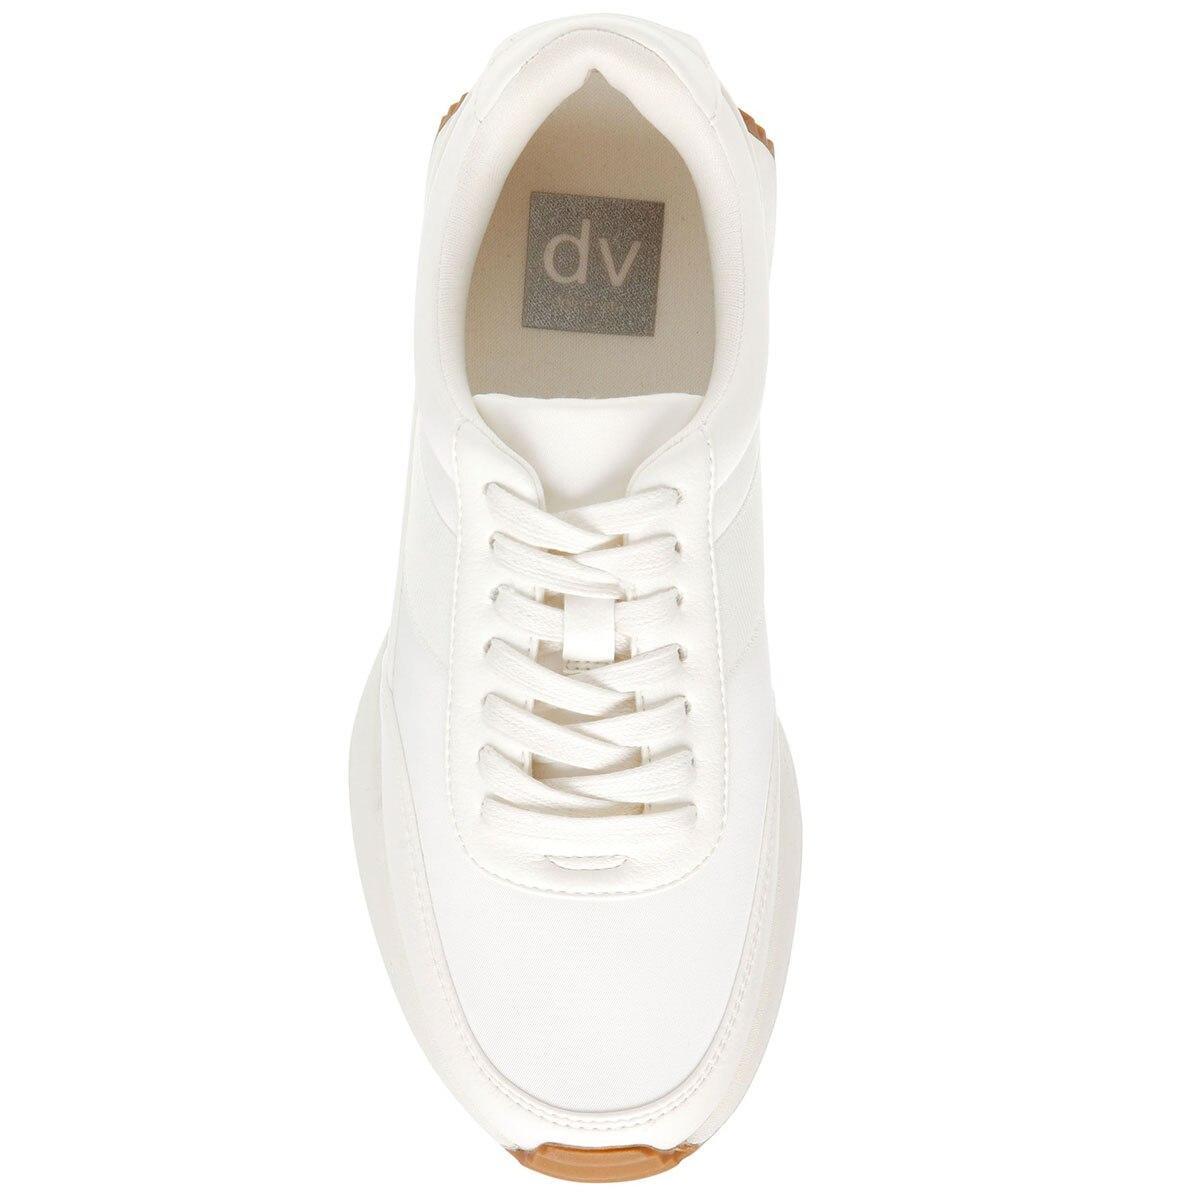 DV Dolce Vita Bettie (White) Women's Shoes Product Image